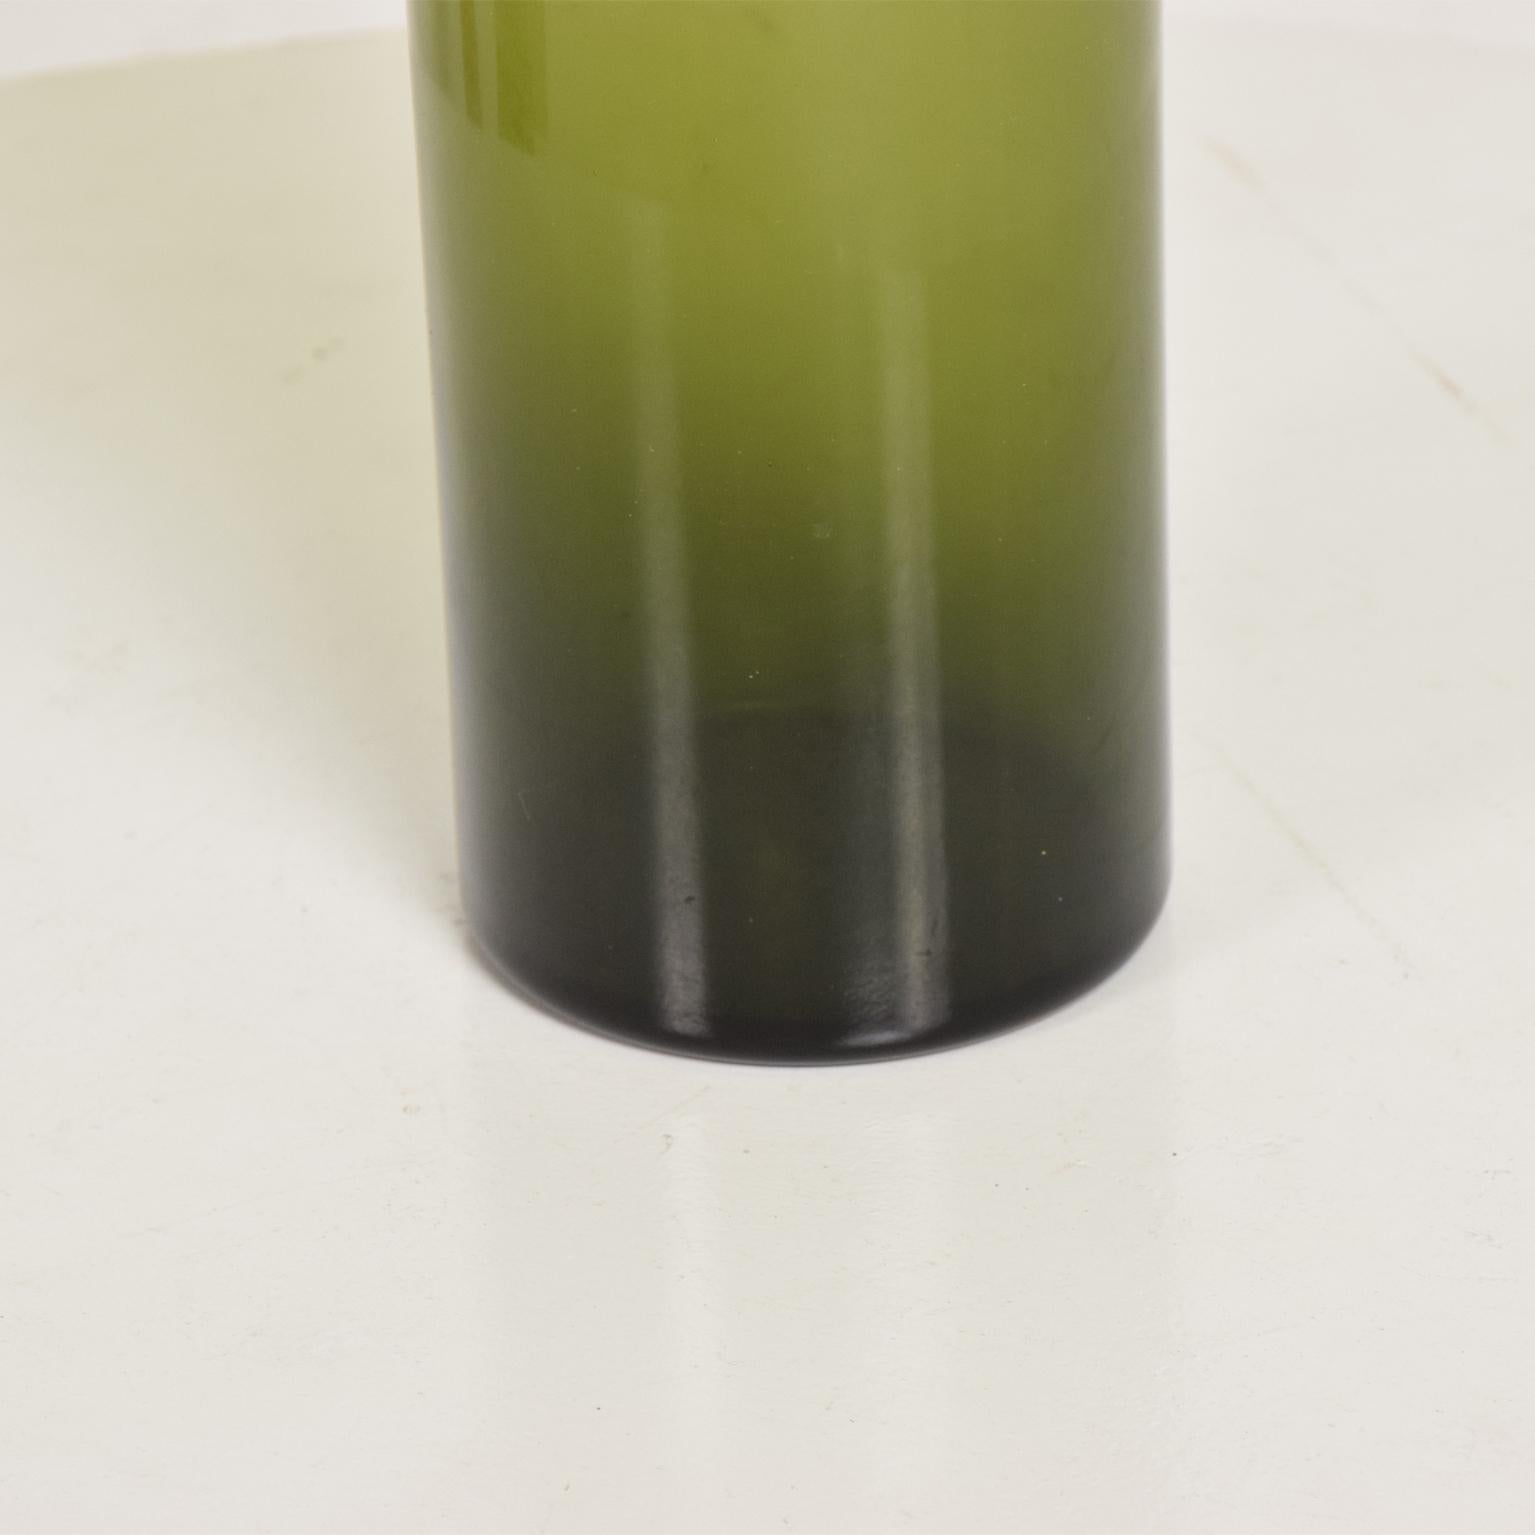 Green Glass Pitcher Vase by Tapio Wirkkala for Iittala Midcentury Danish Modern 1